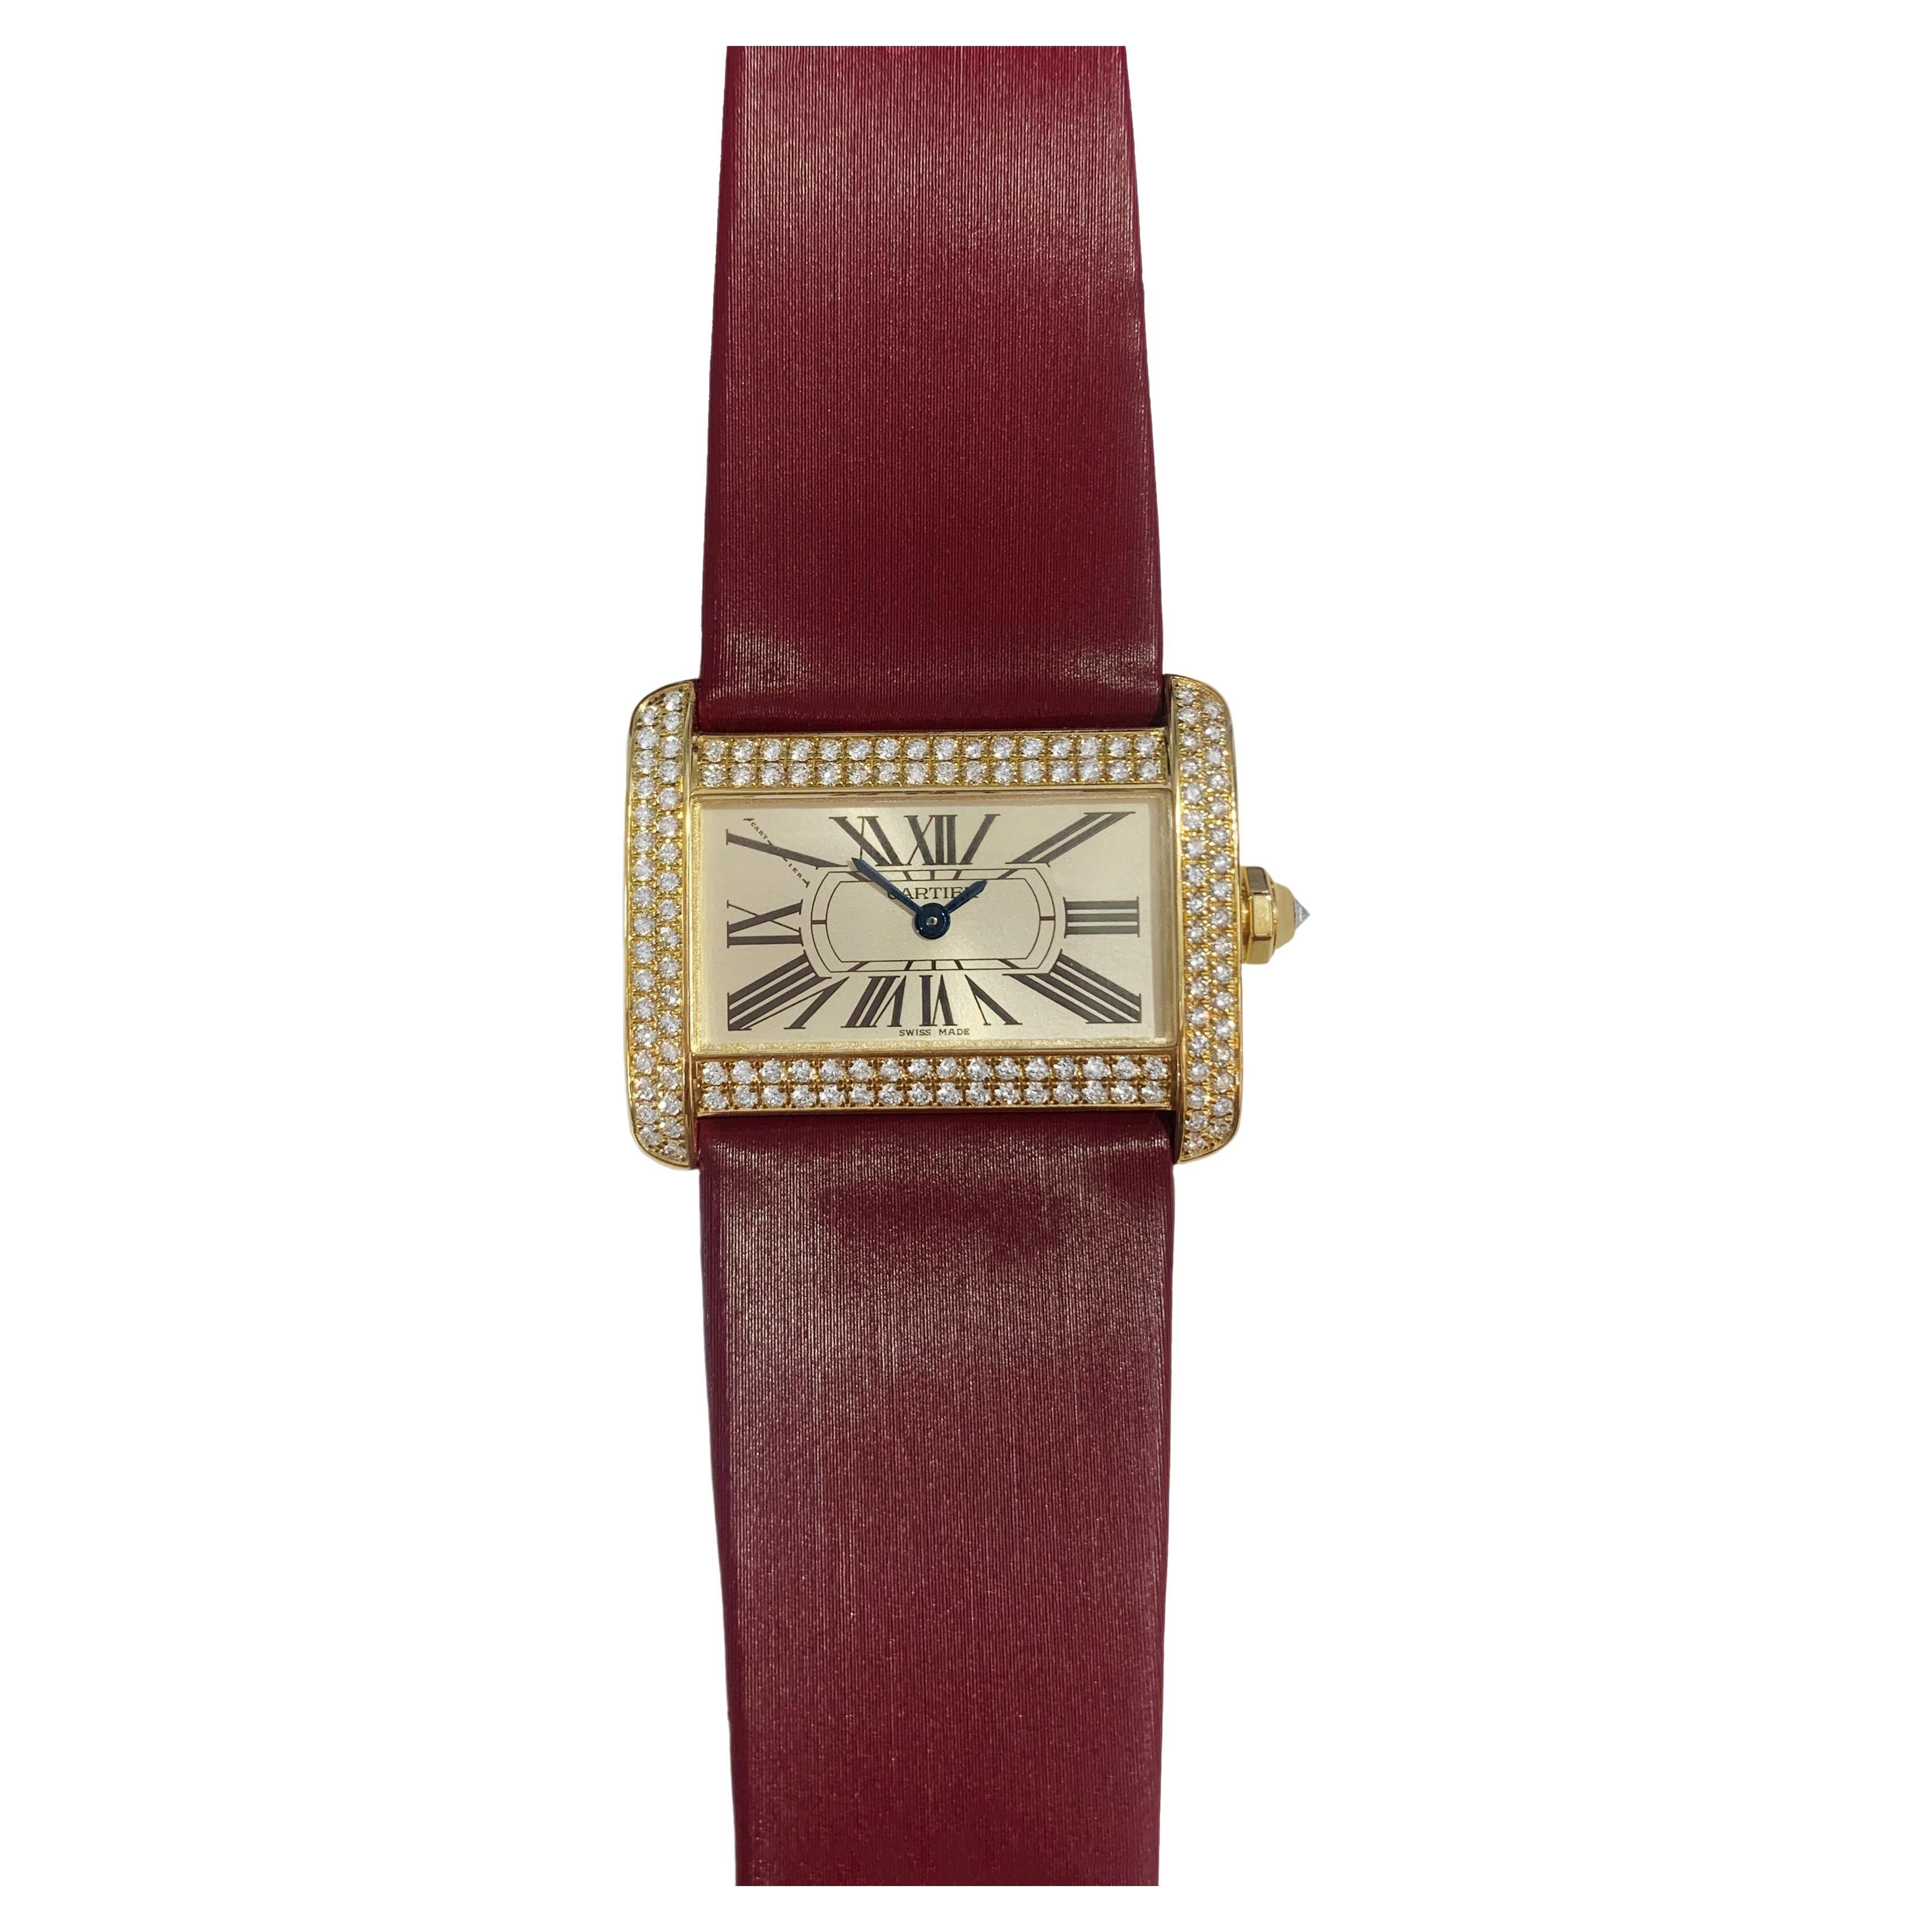 Cartier Tank Divan 18k Gelbgold Uhr 2601